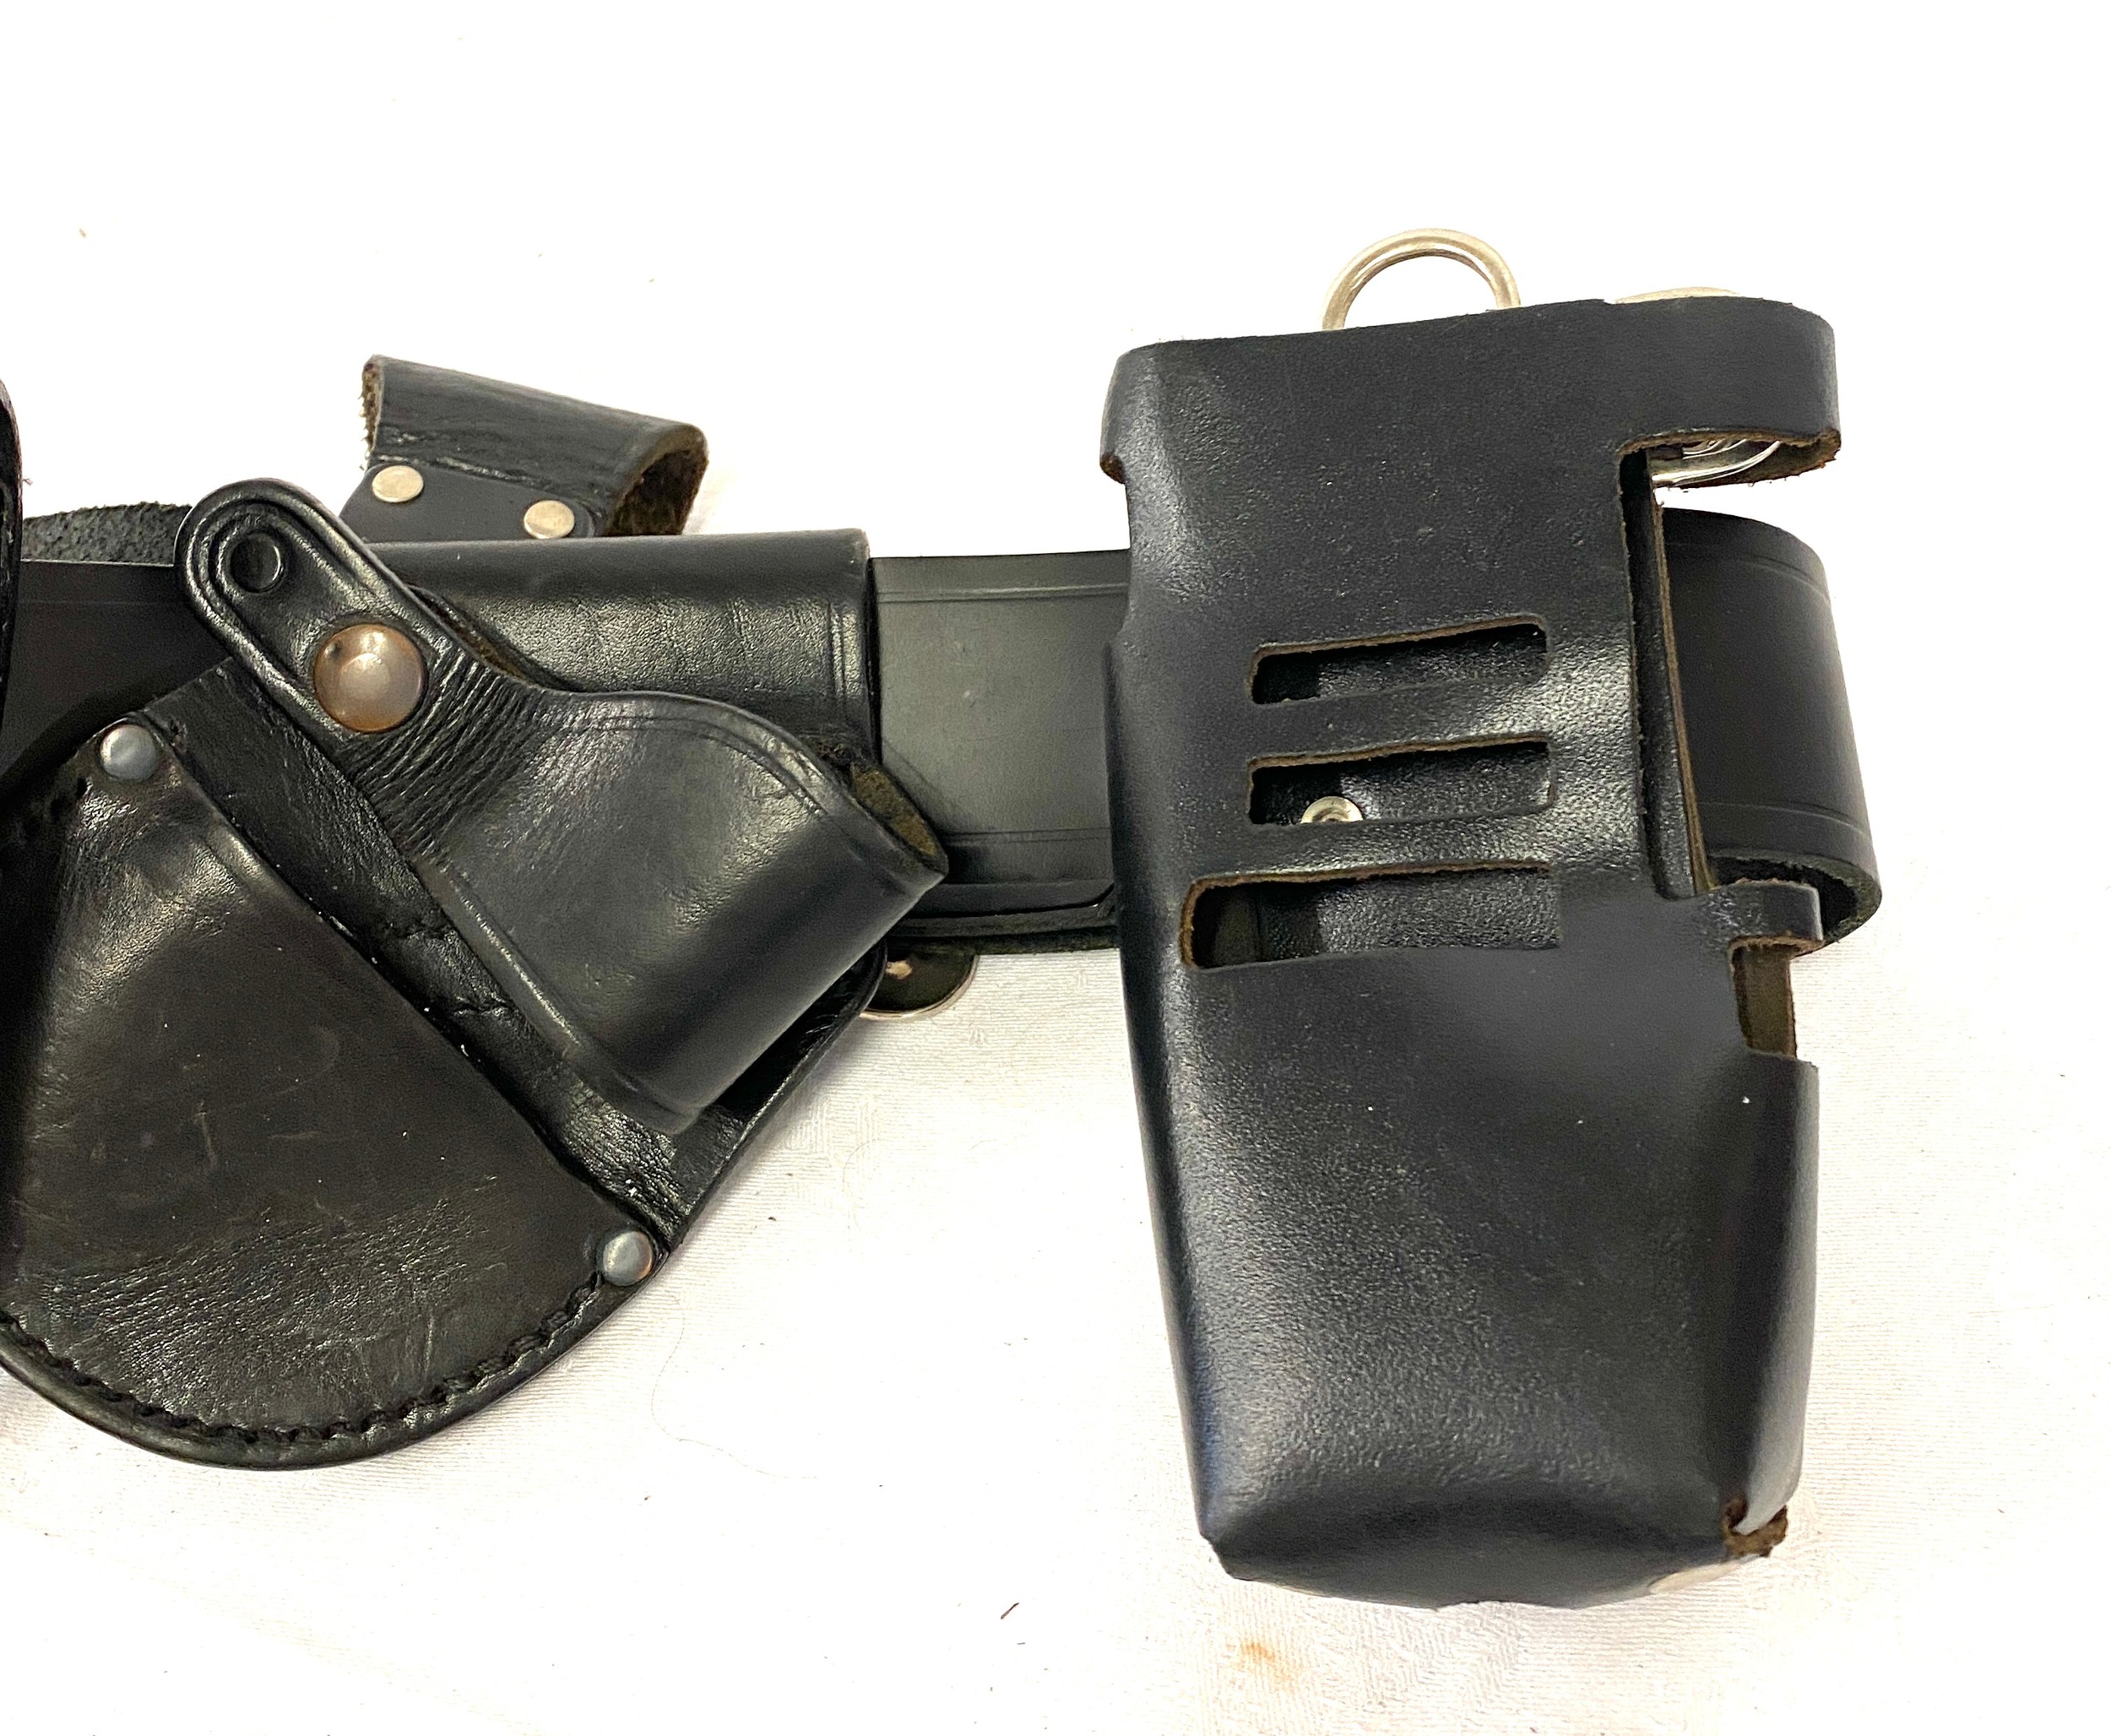 Leather P9206 PWL duty belt - Image 2 of 4